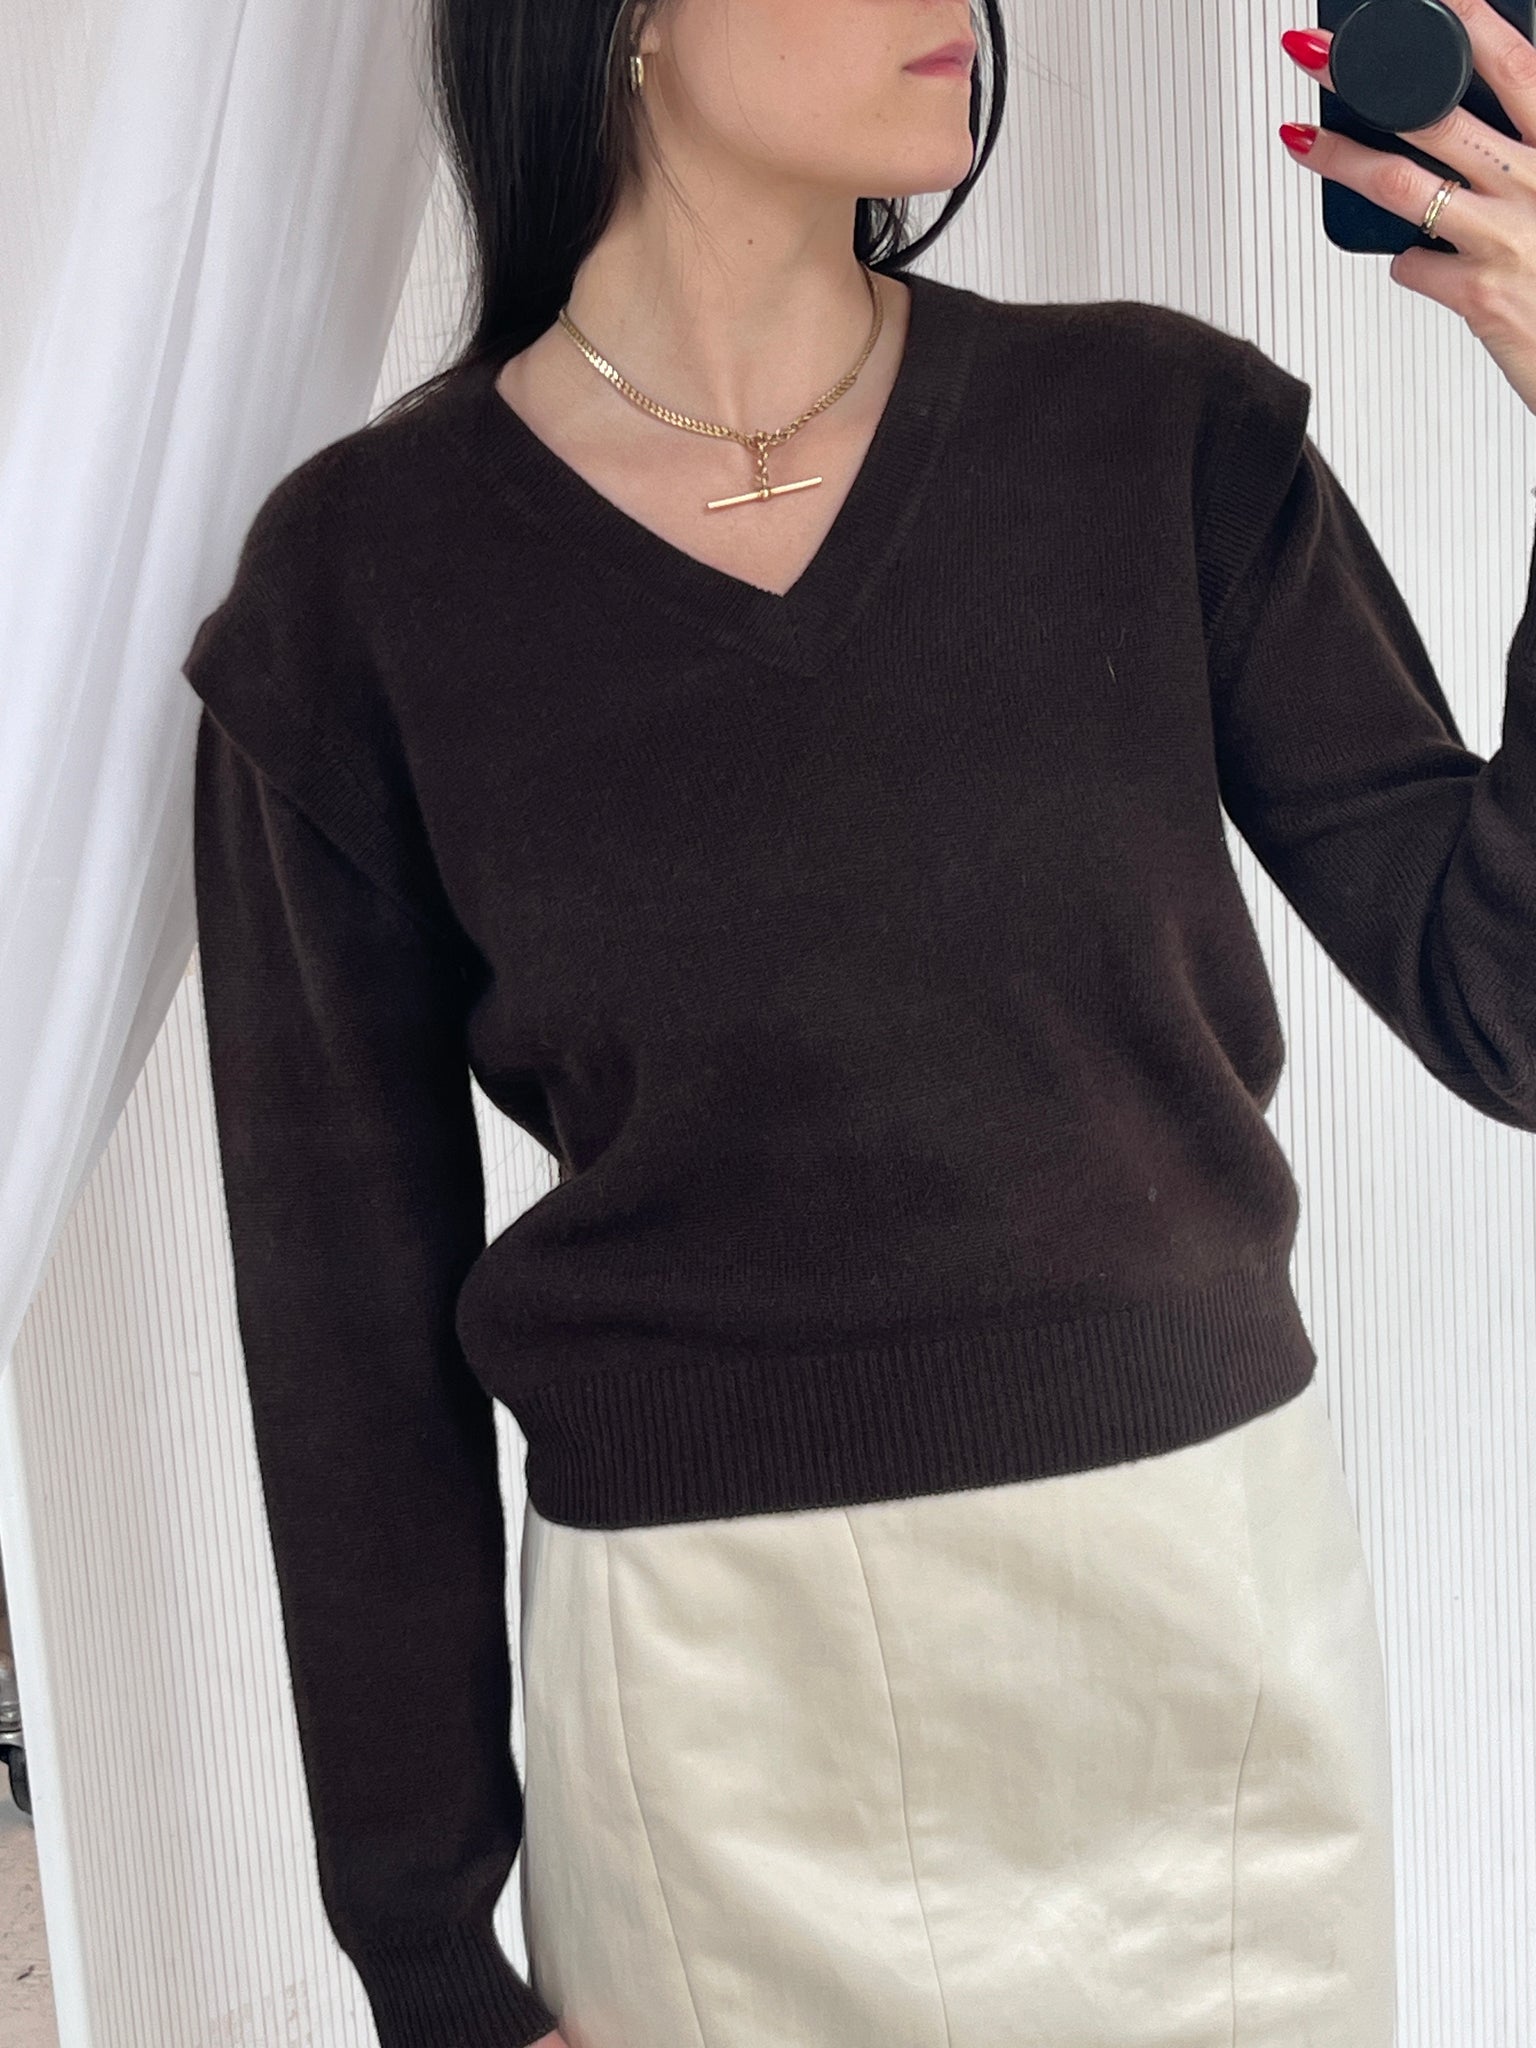 Brown Cashmere Sweater/Vest